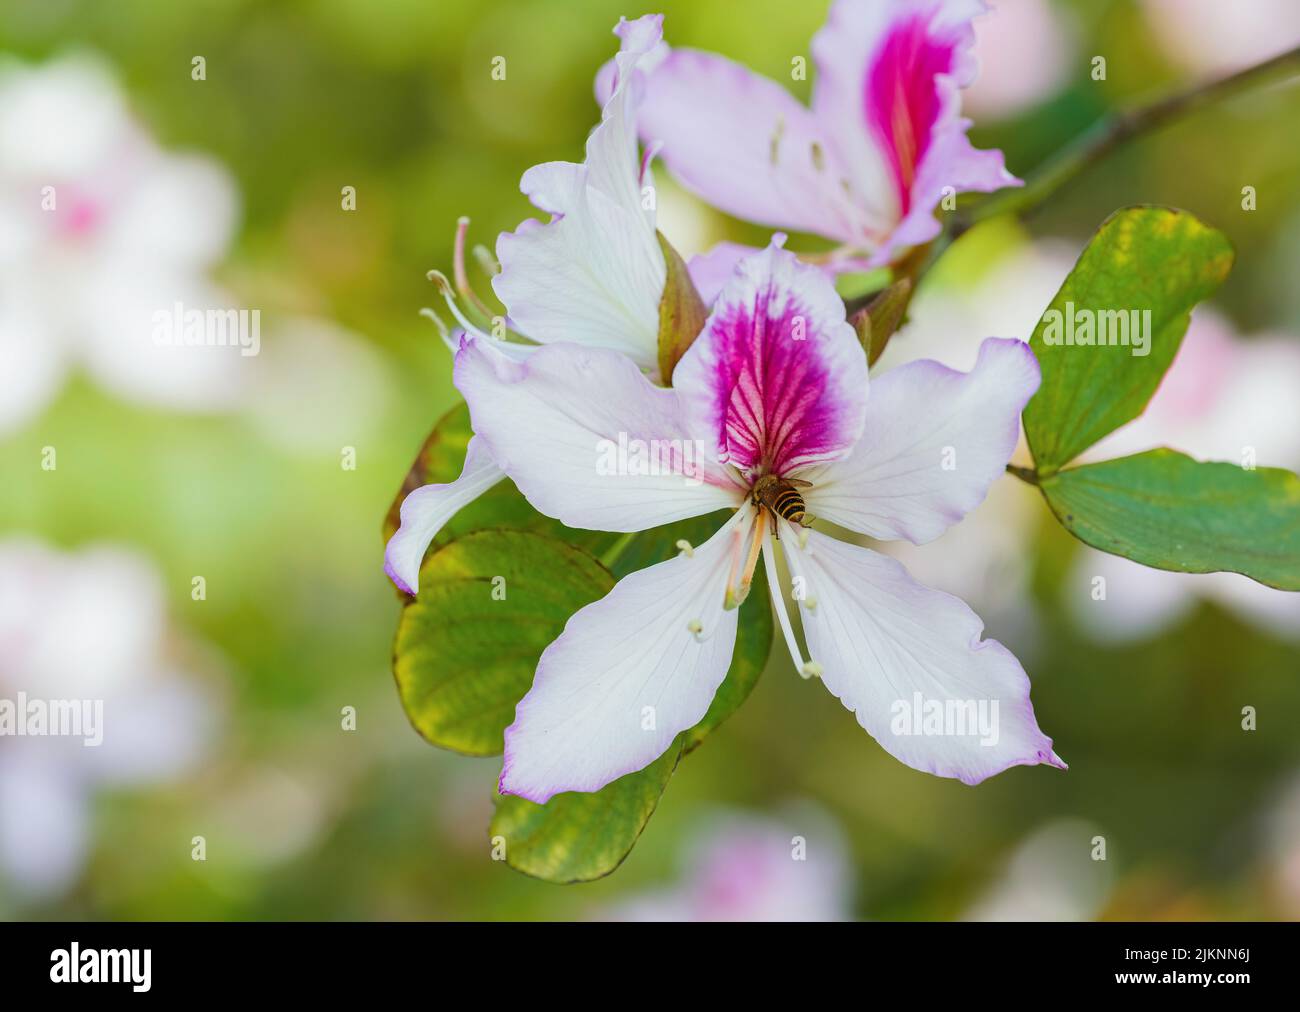 A closeup shot of a bauhinia blossoming in the garden Stock Photo